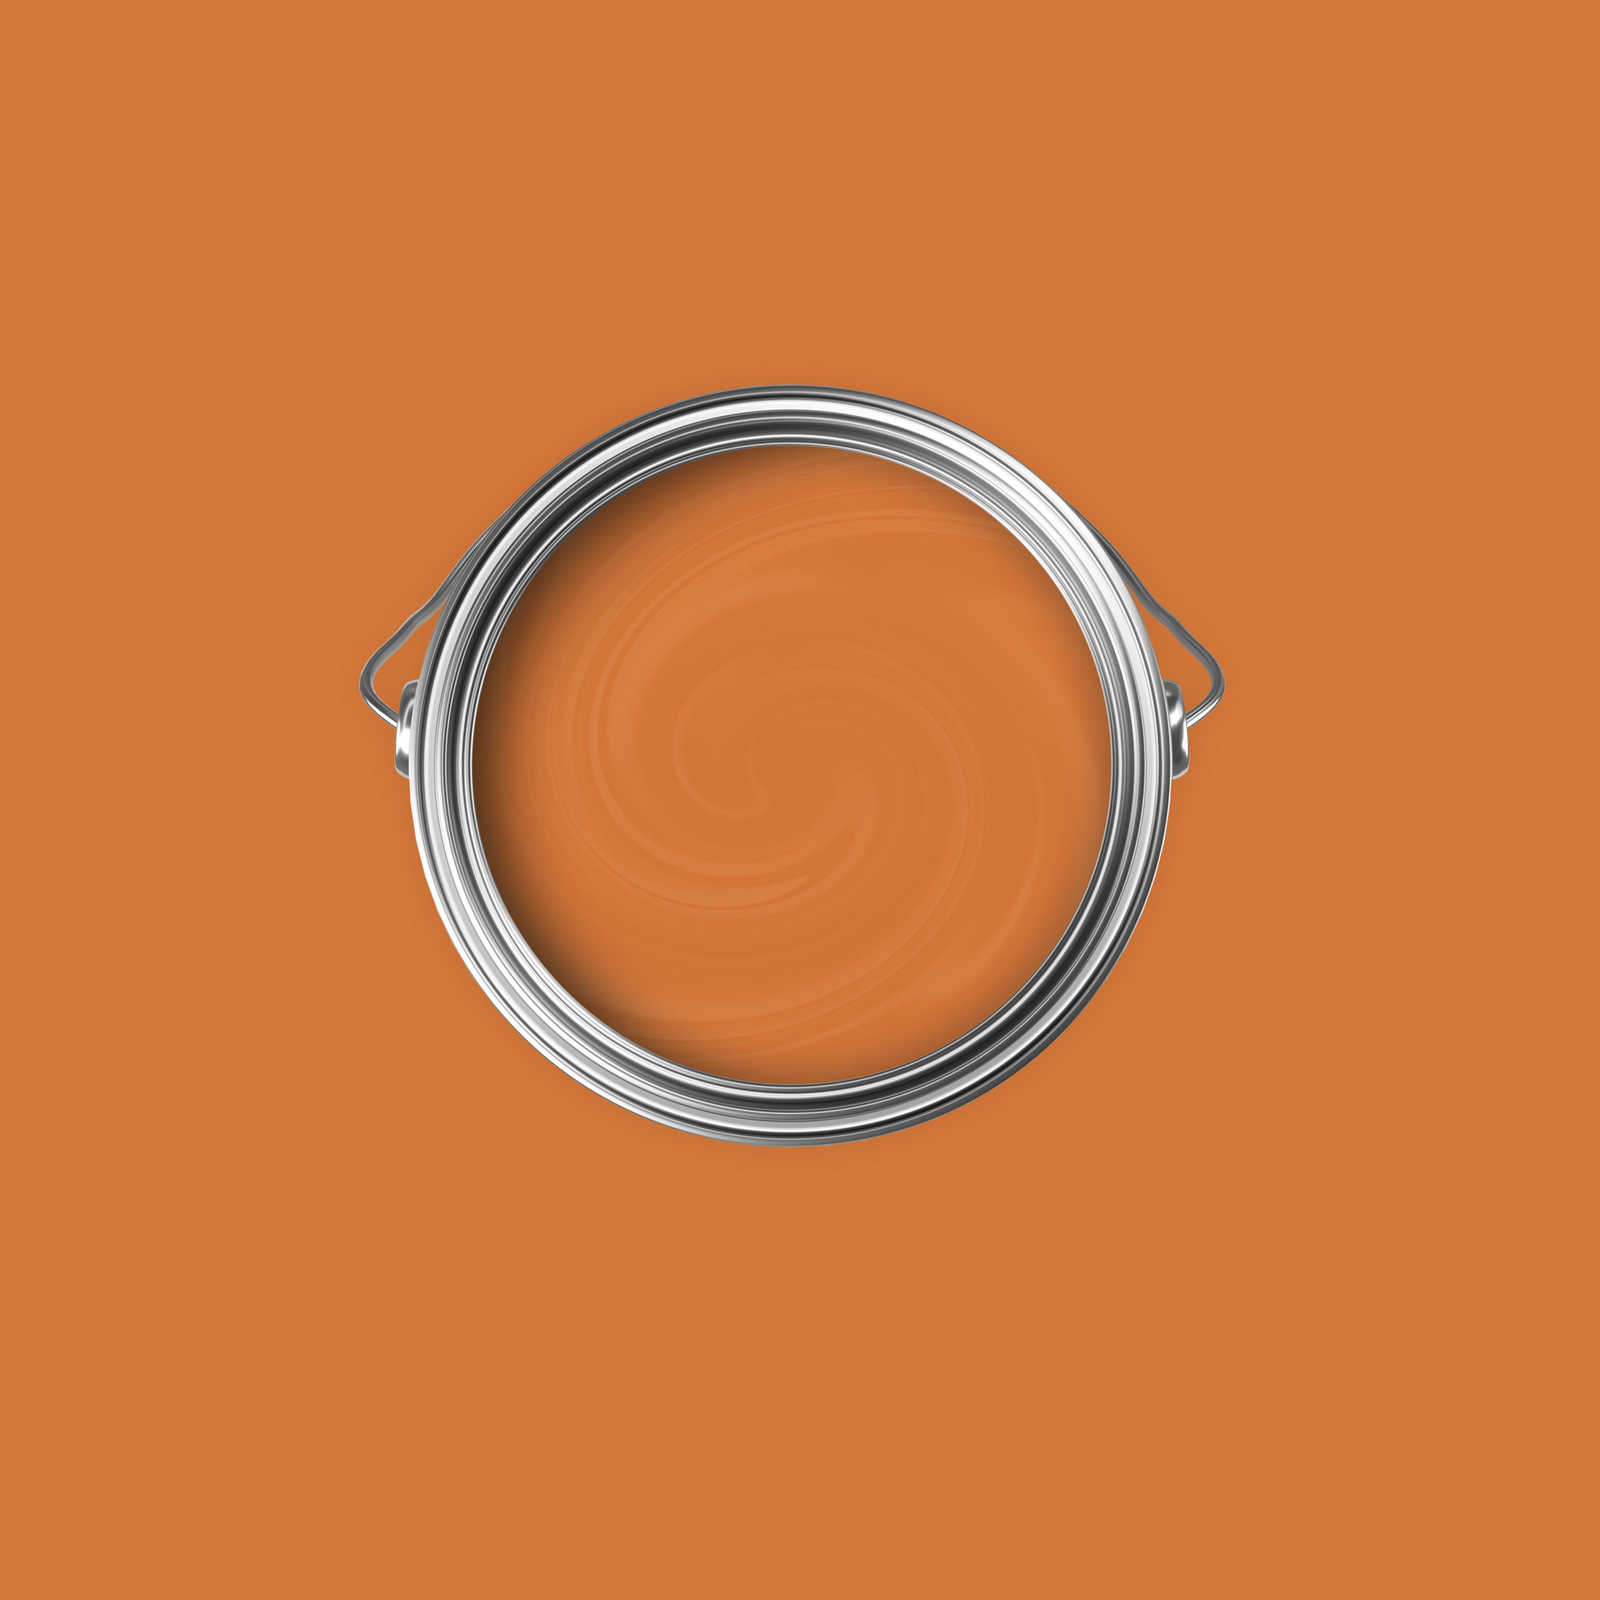             Premium Muurverf Warm Oranje »Pretty Peach« NW903 – 2,5 Liter
        